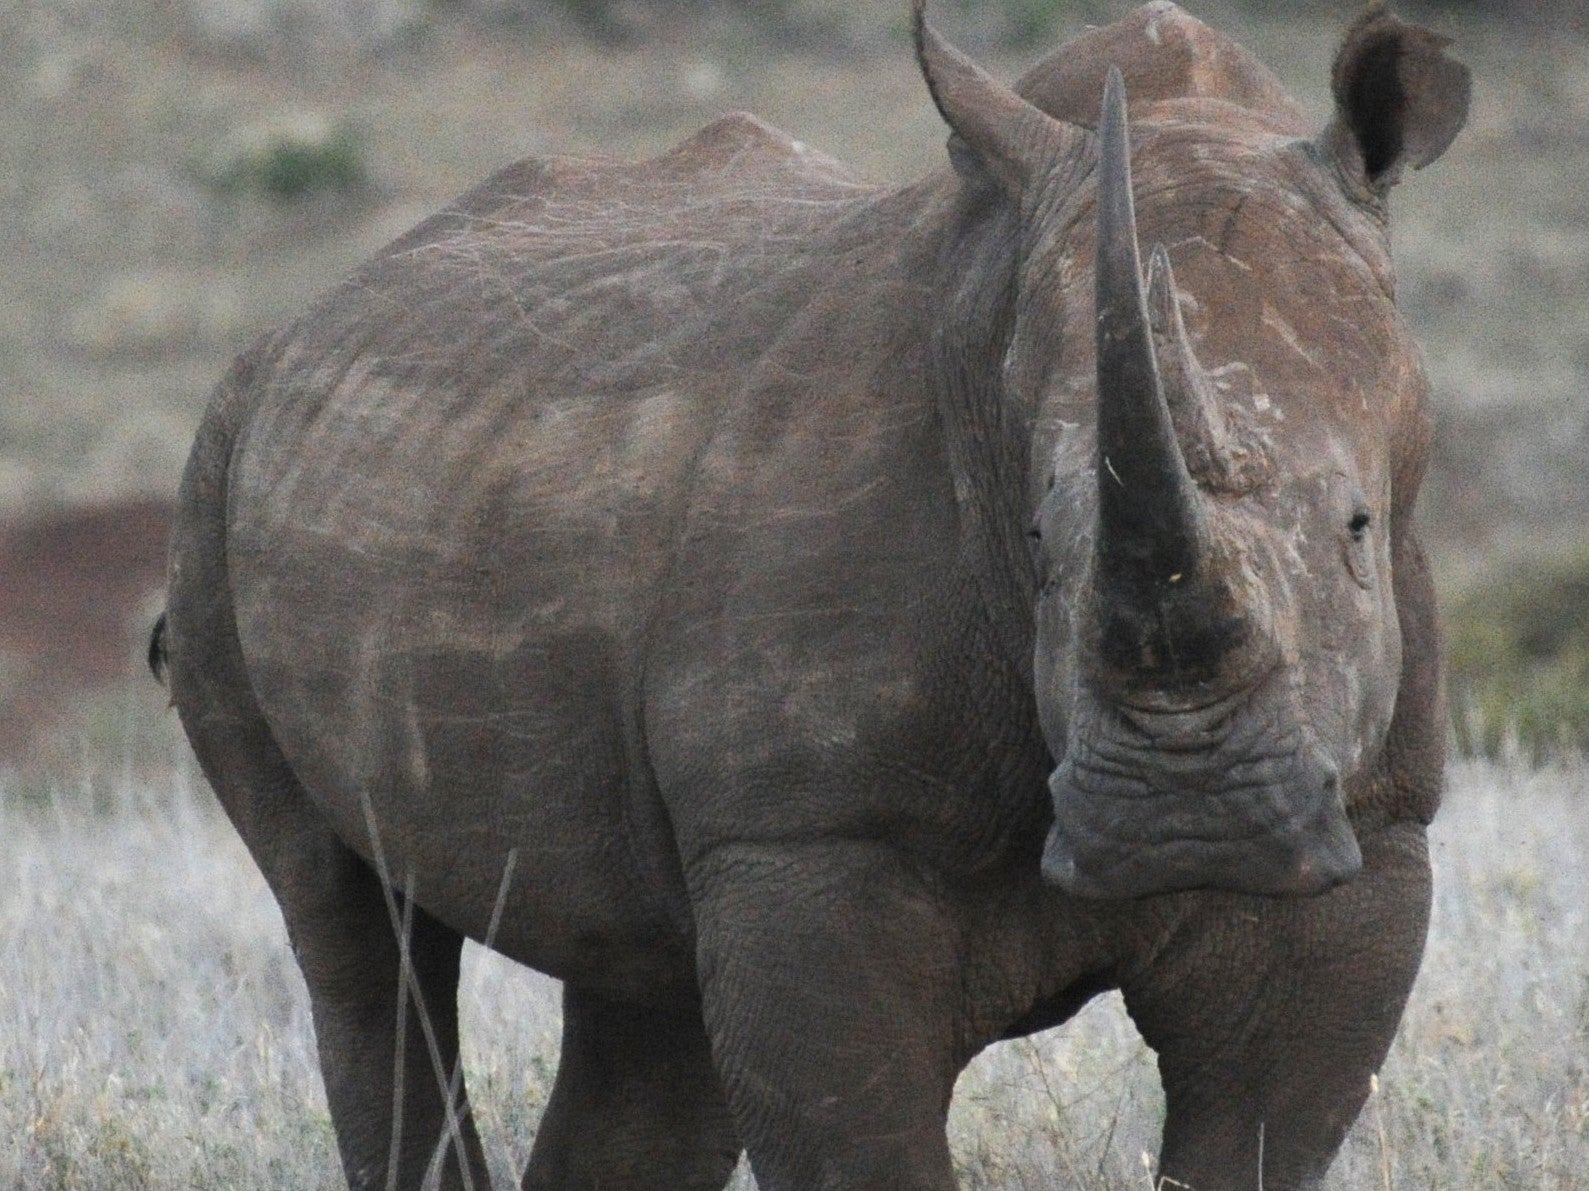 Despite Ban, Rhino Horn Flooding Black Markets Across China